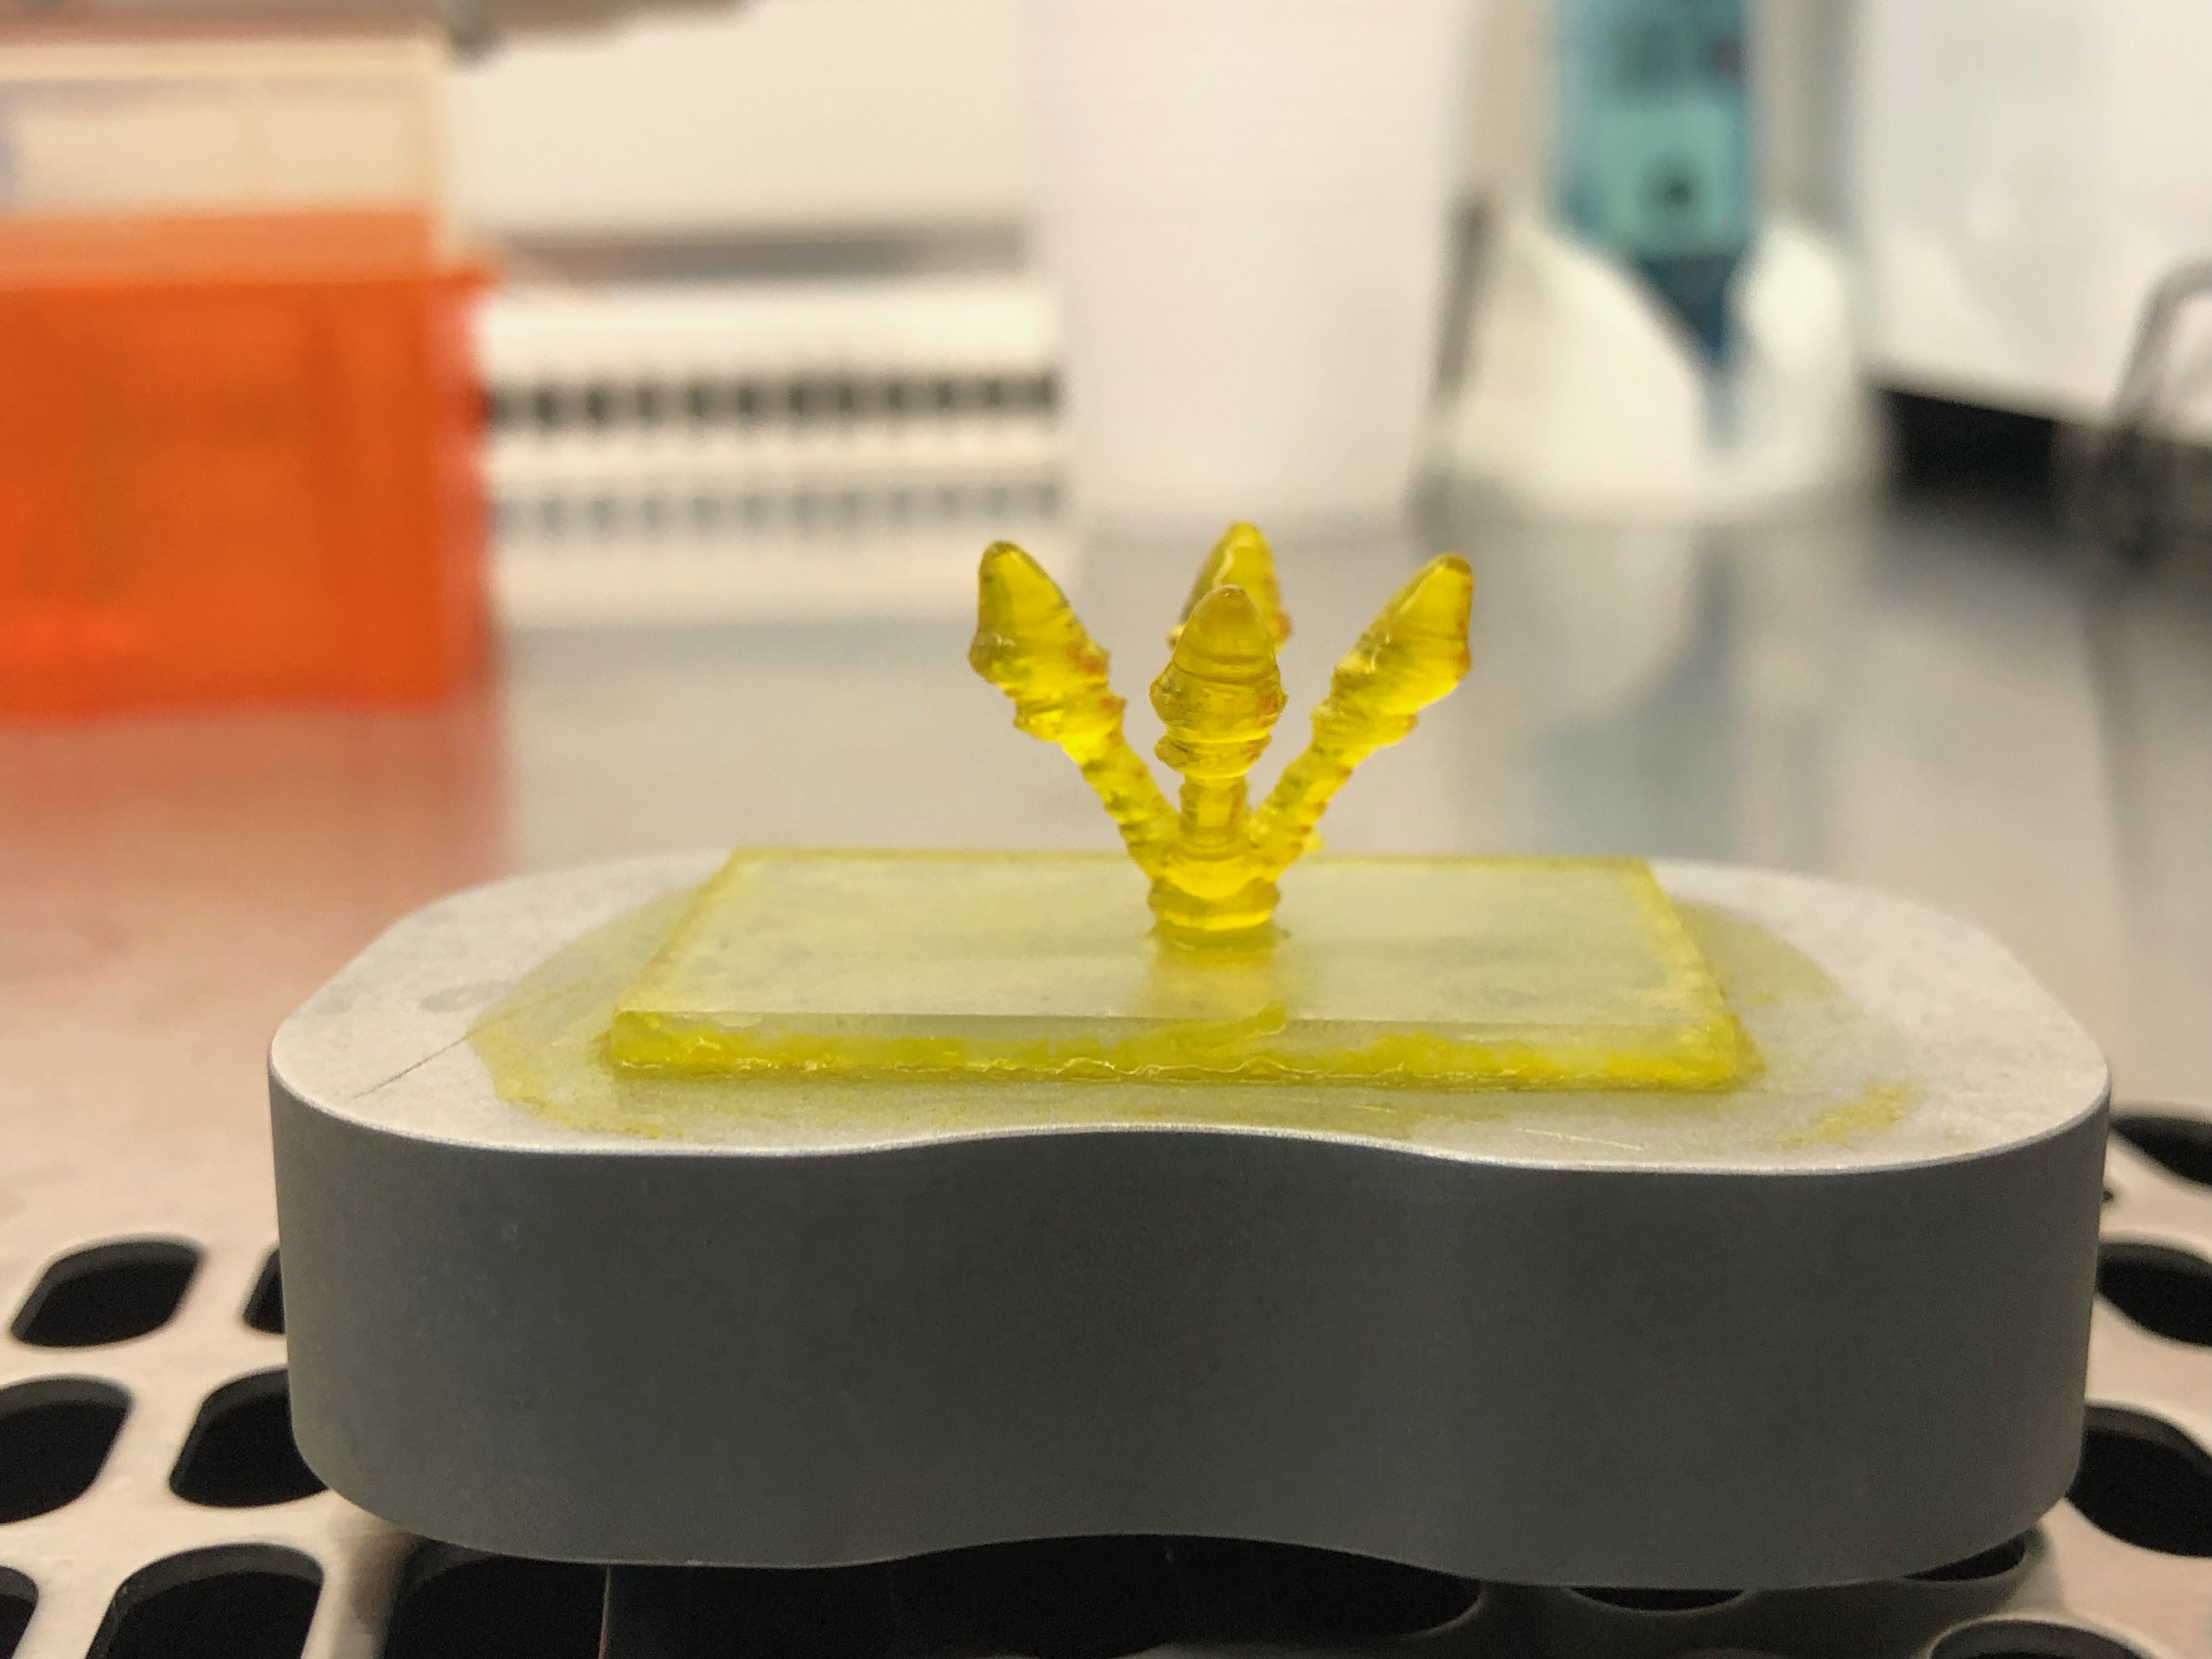 3D printed hydrogel form